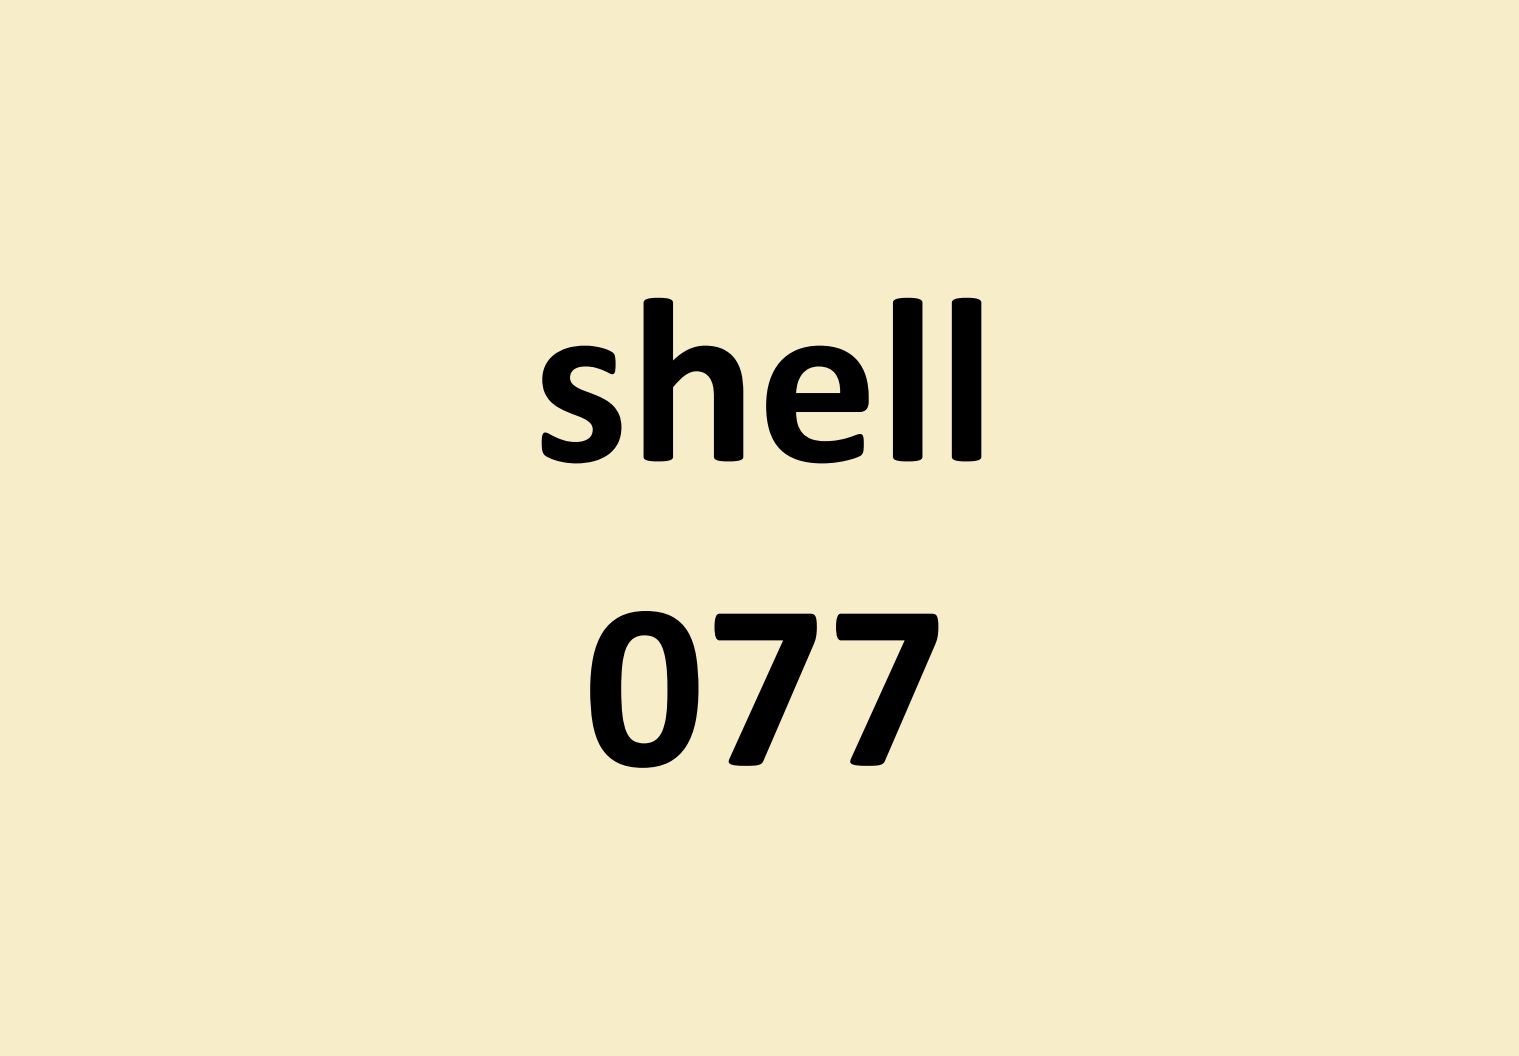 shell 077